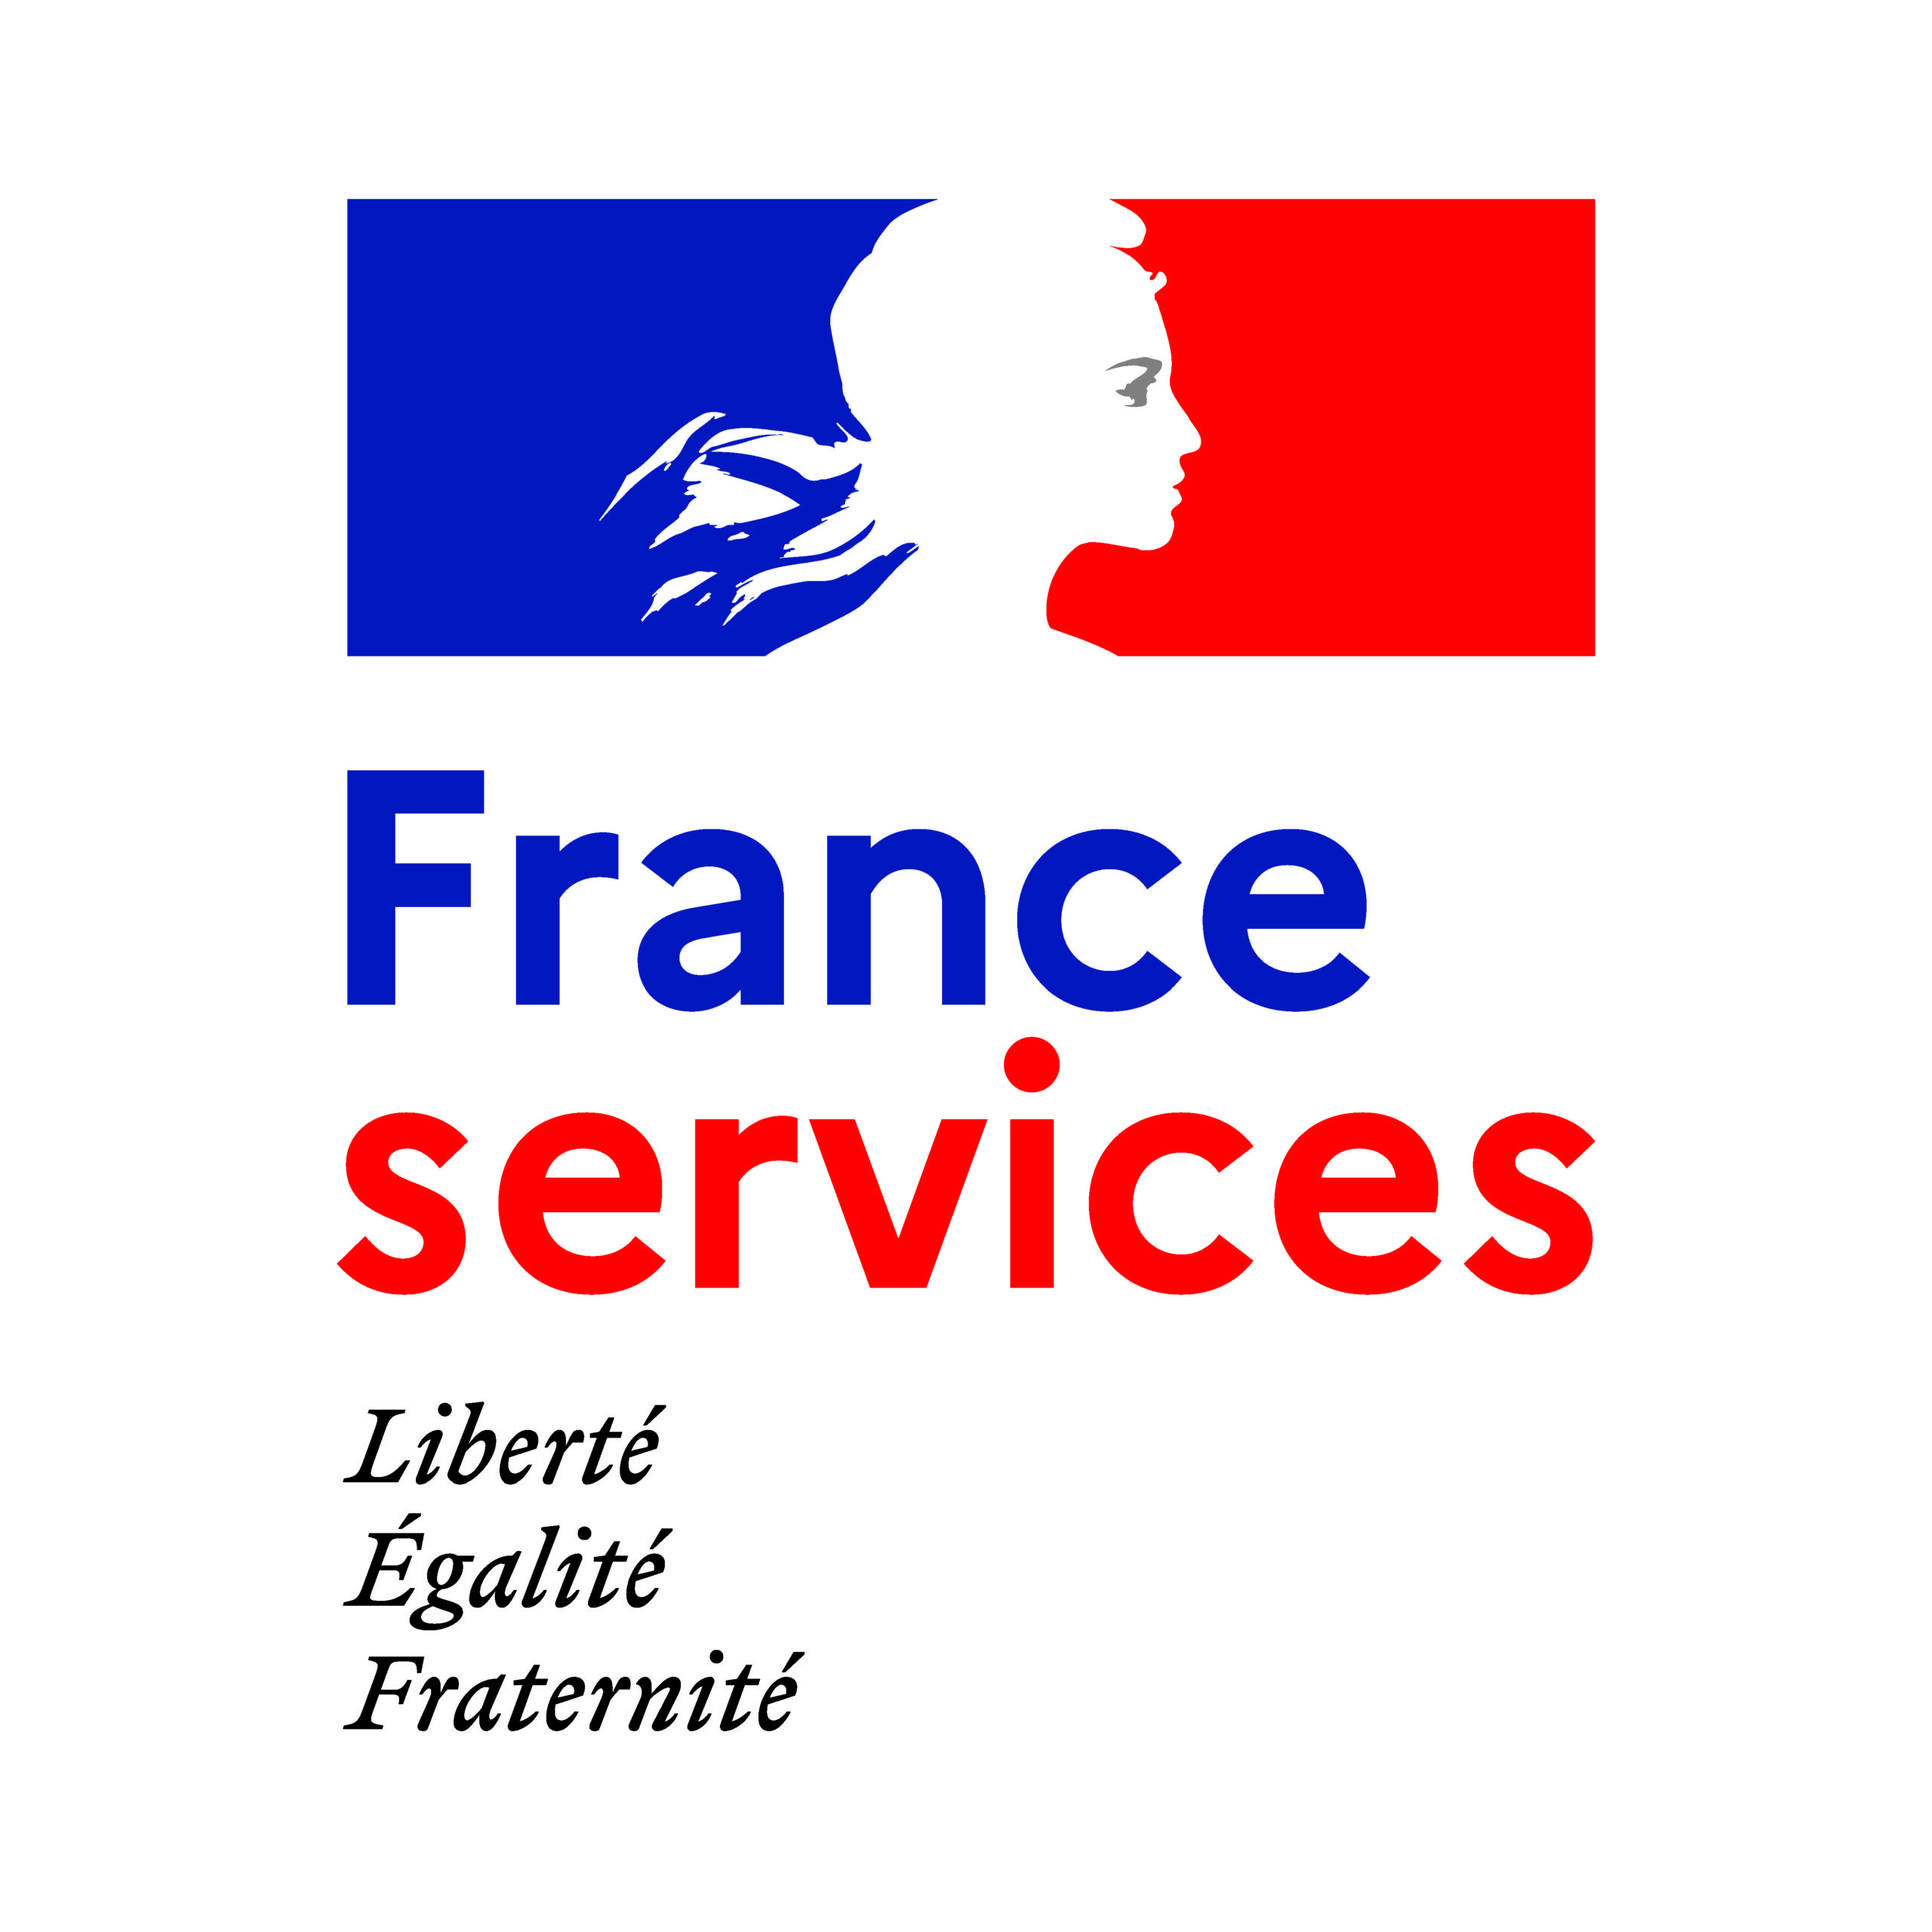 France Service.jpg